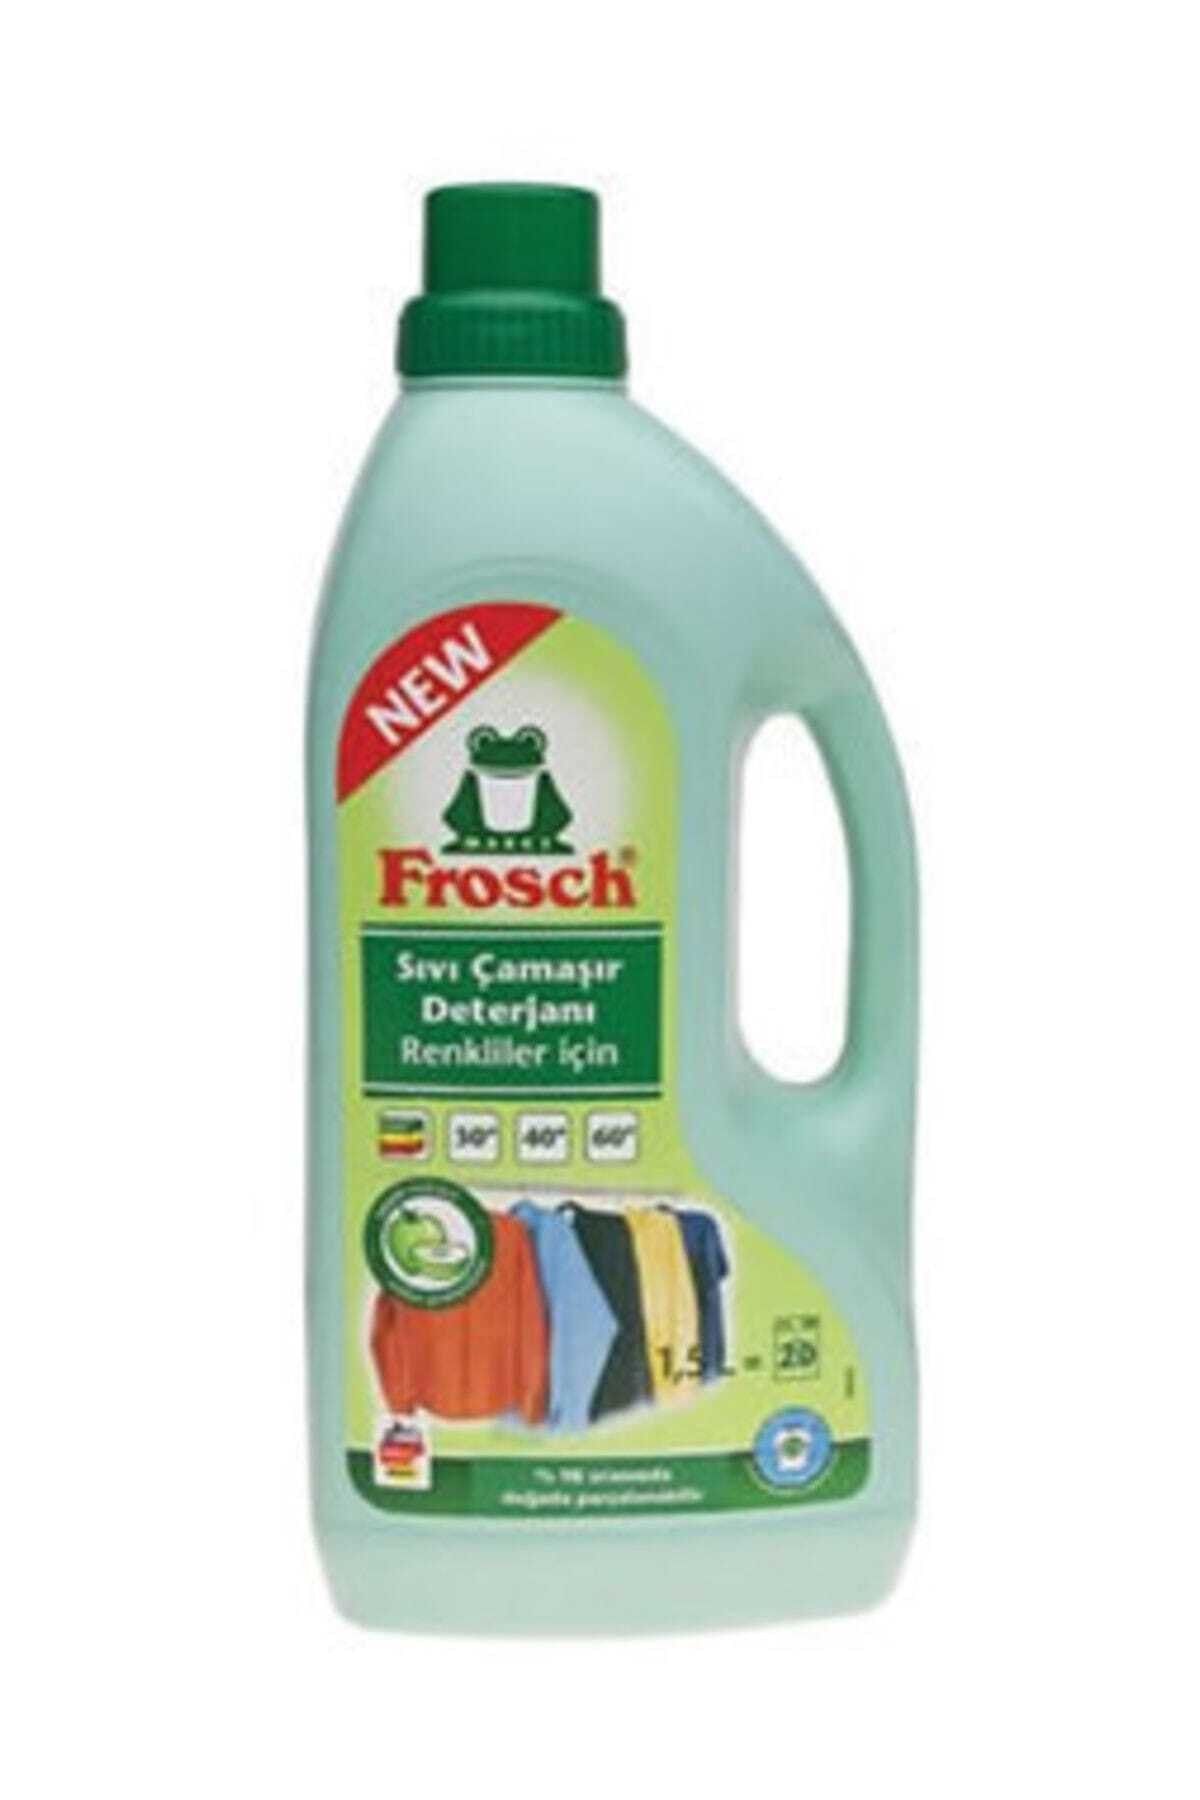 Frosch Renkli Çamaşır Deterjanı 1500 Ml